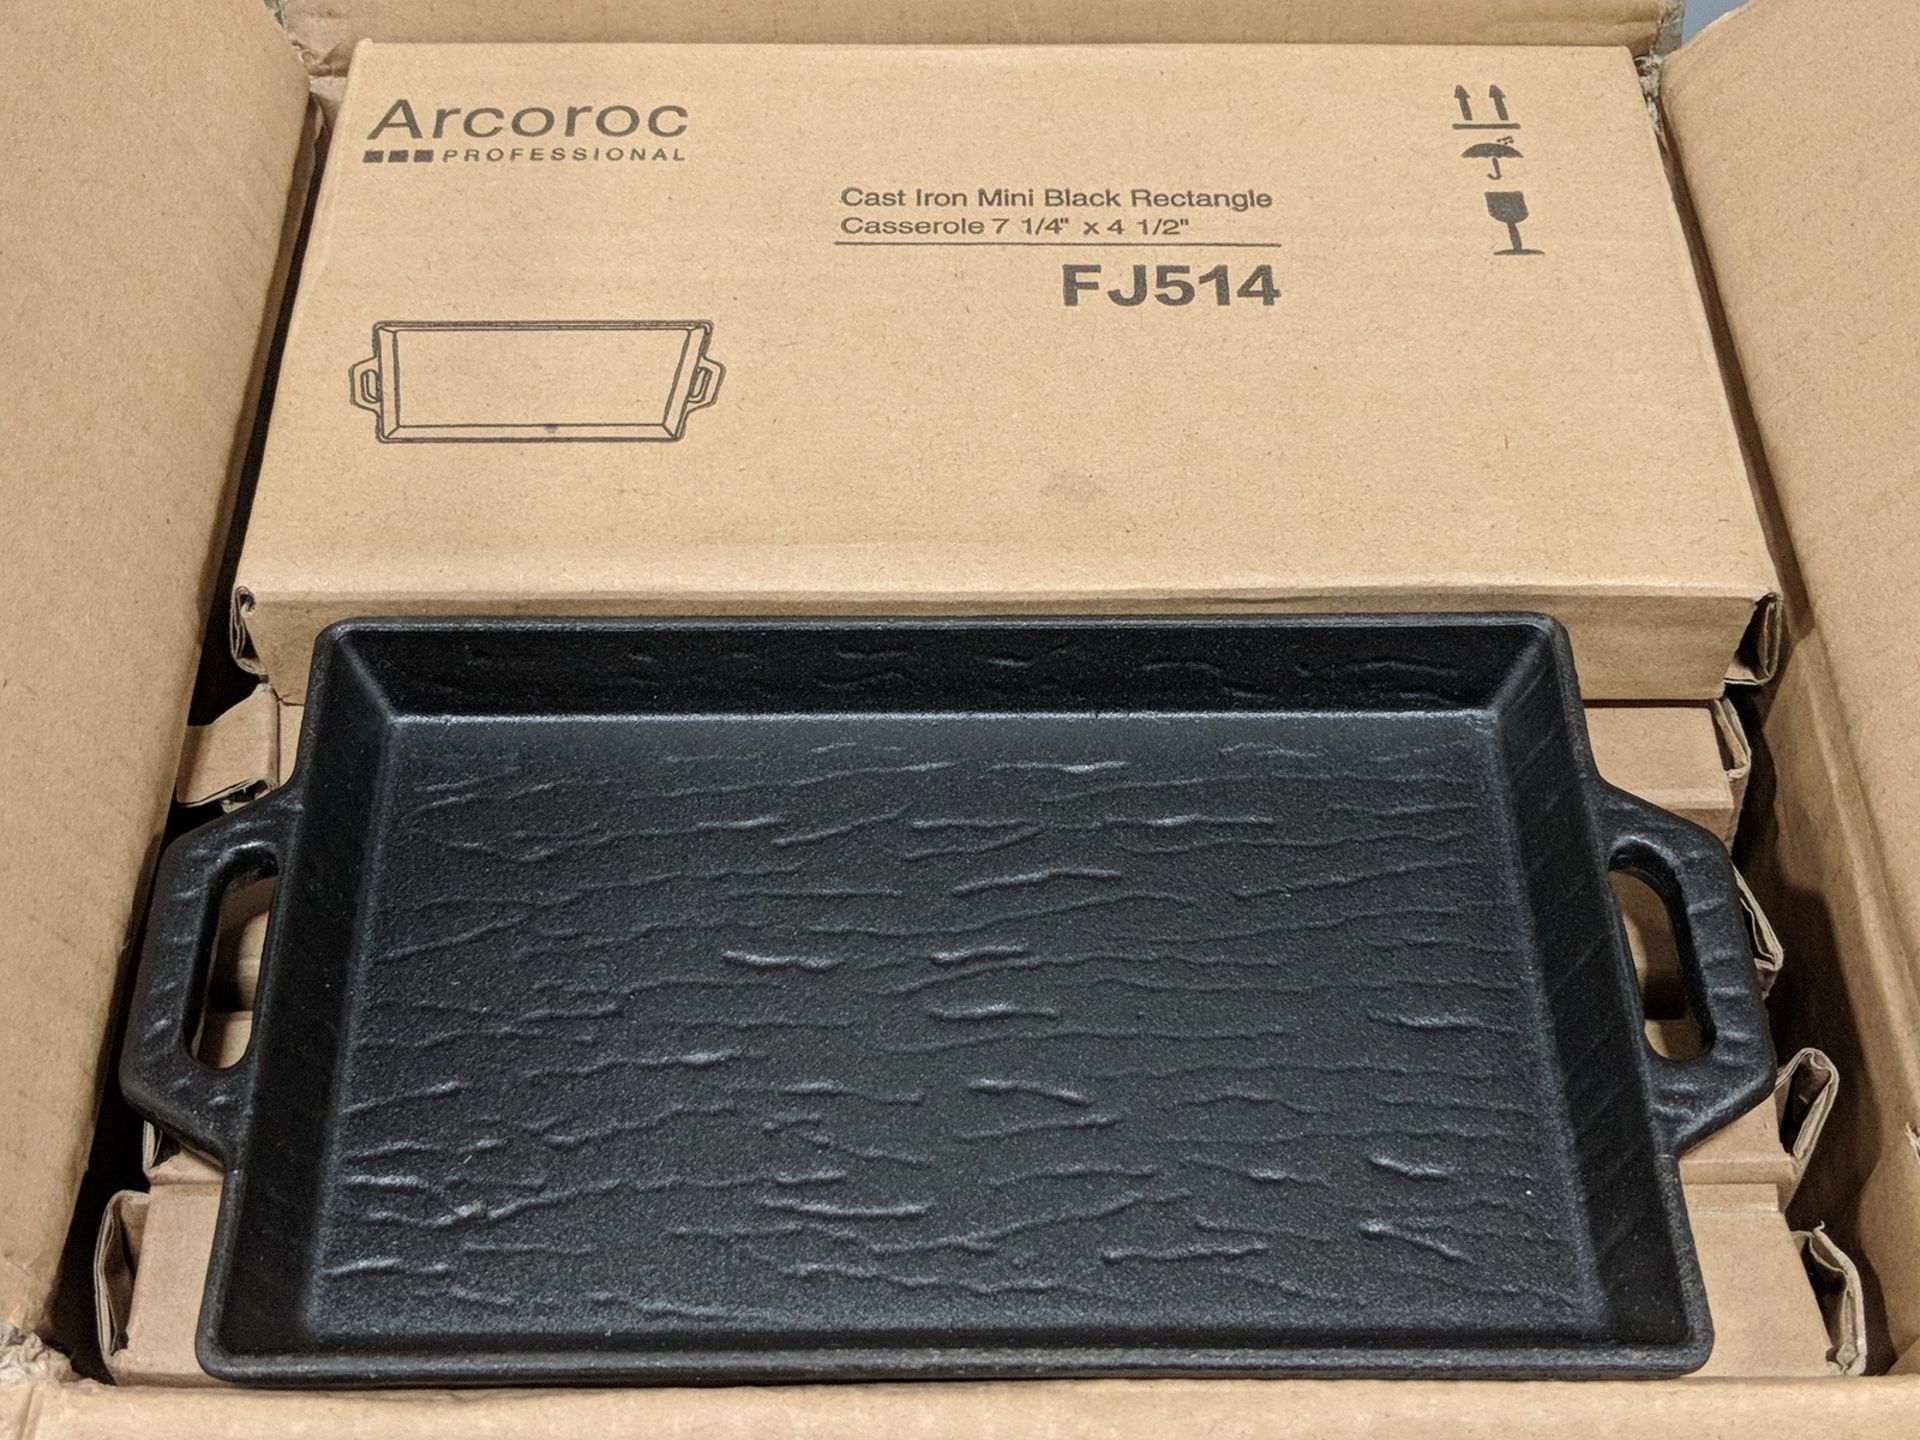 7.5" x 4.5" Cast Iron Casserole Dishes, Arcoroc FJ514 - Lot of 8